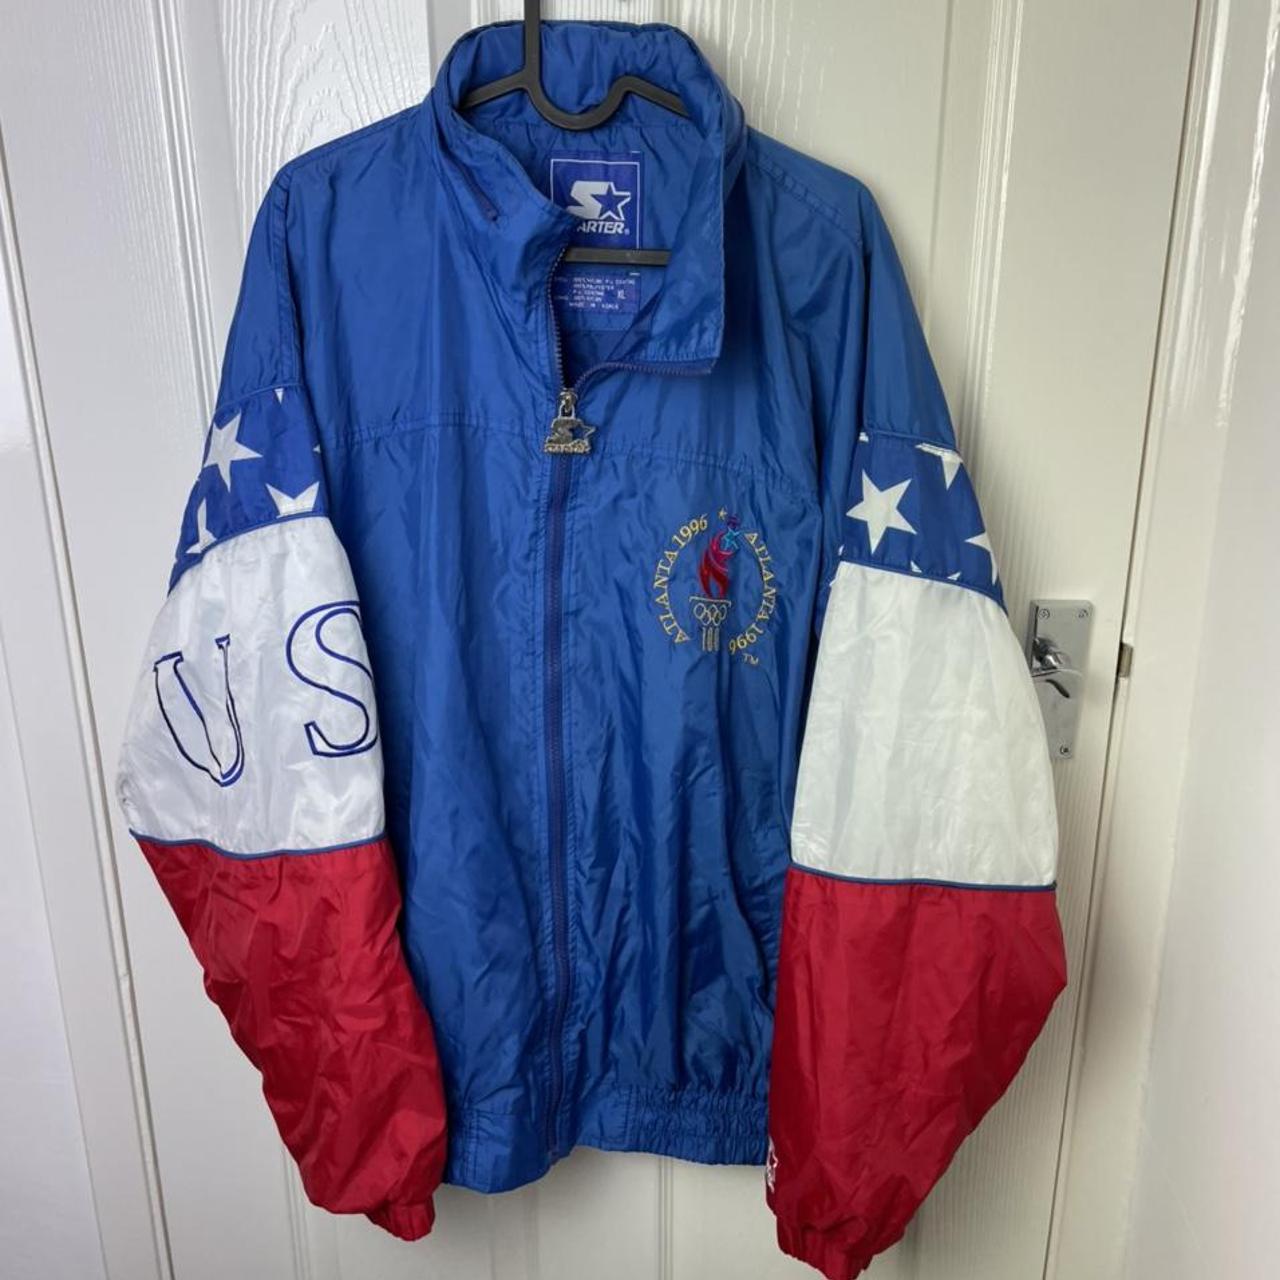 Vintage 1996 USA Olympics Windbreaker XL 26inches... - Depop